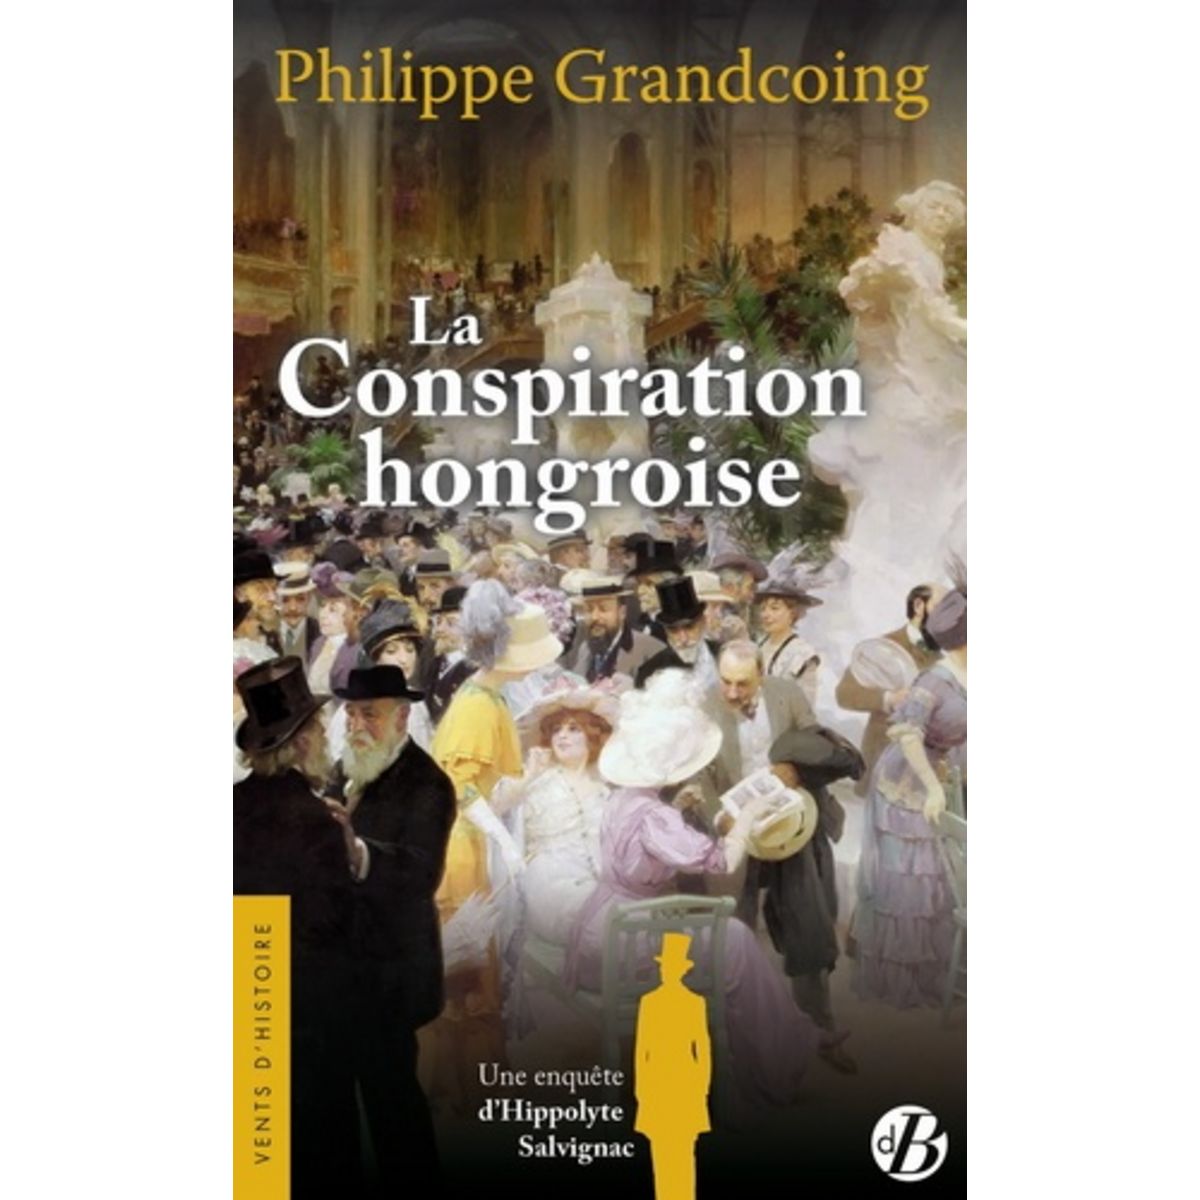  LA CONSPIRATION HONGROISE, Grandcoing Philippe